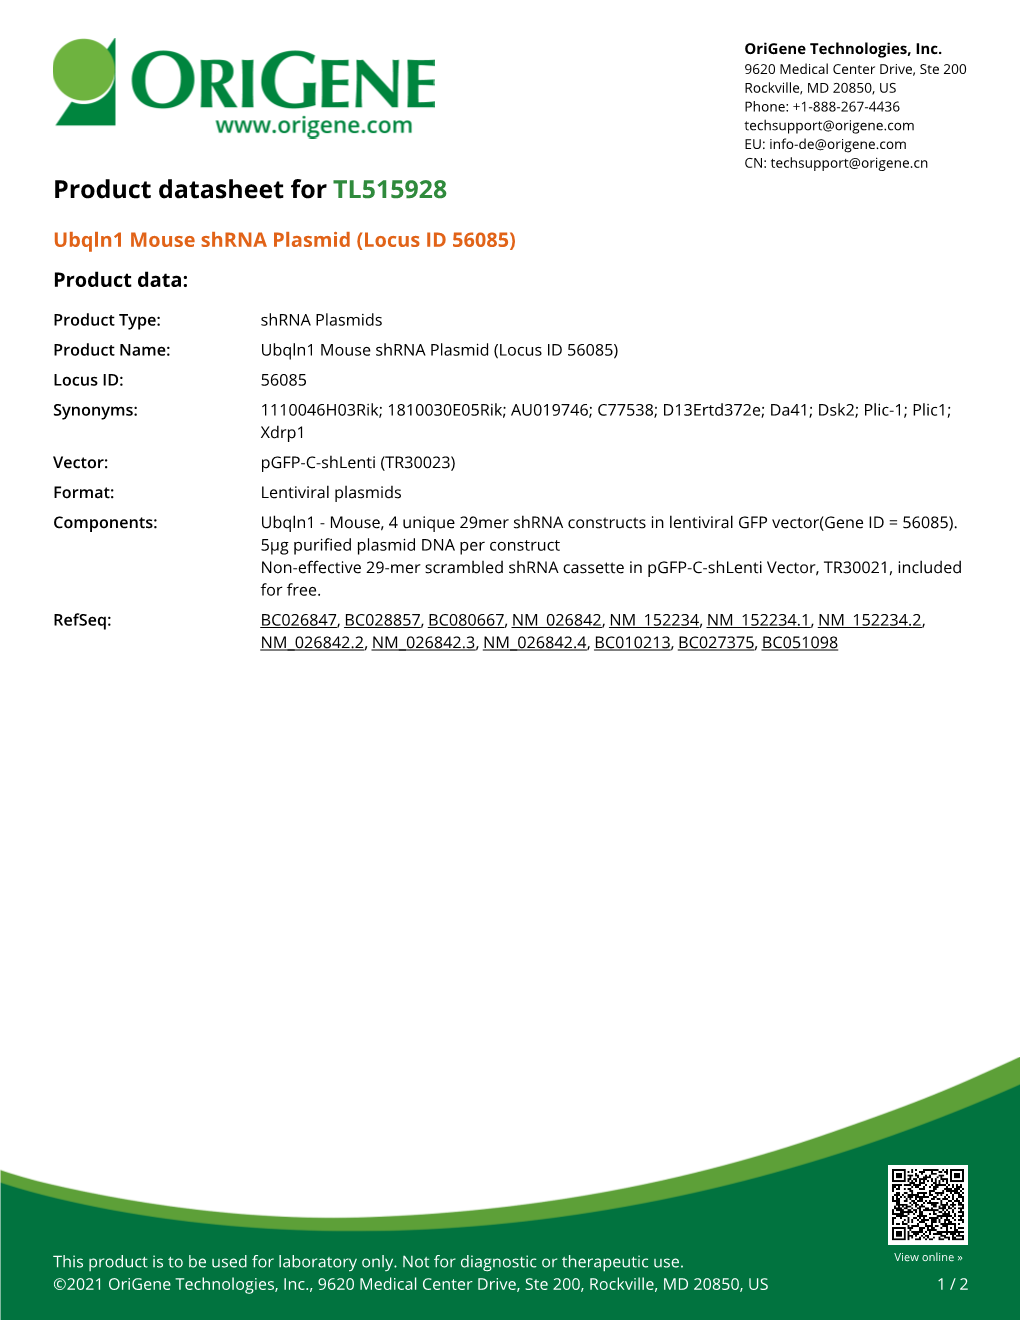 Ubqln1 Mouse Shrna Plasmid (Locus ID 56085) Product Data